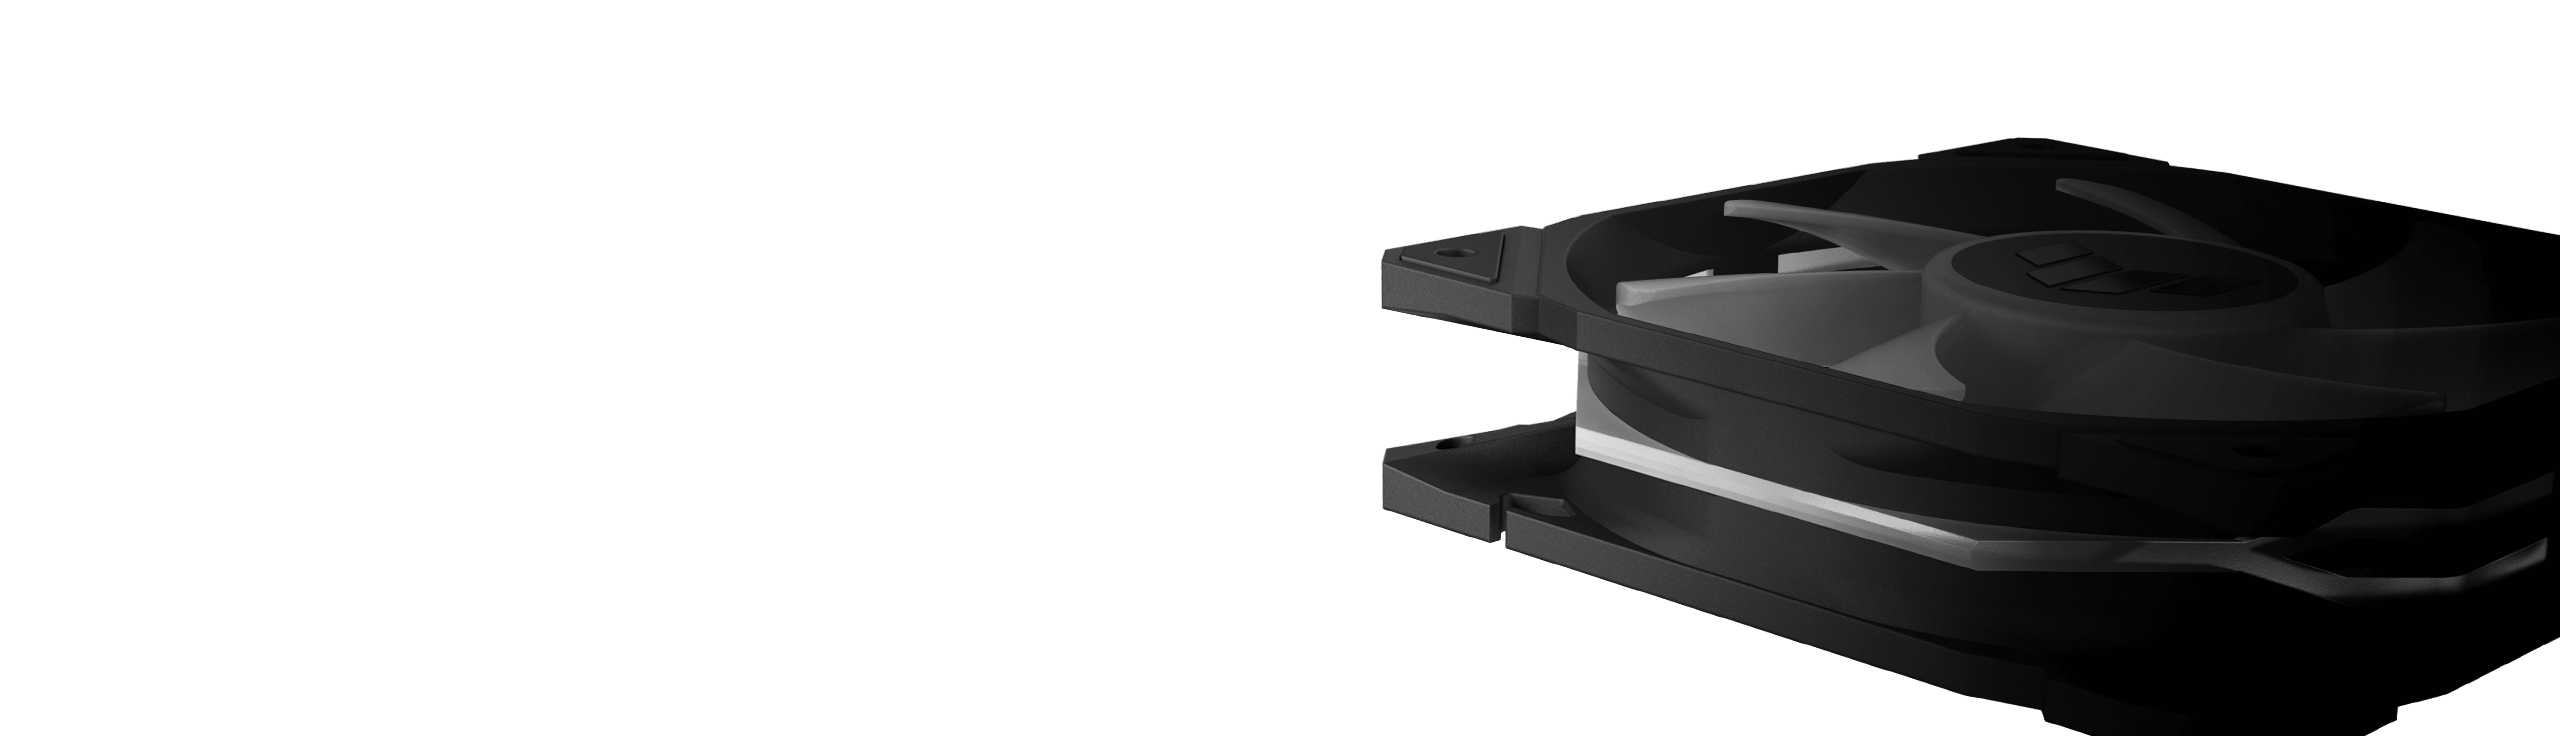 ASUS TUF Gaming TR120 ARGB 反向风扇的额外厚度28毫米风扇框架与其他25毫米风扇框架进行比较。